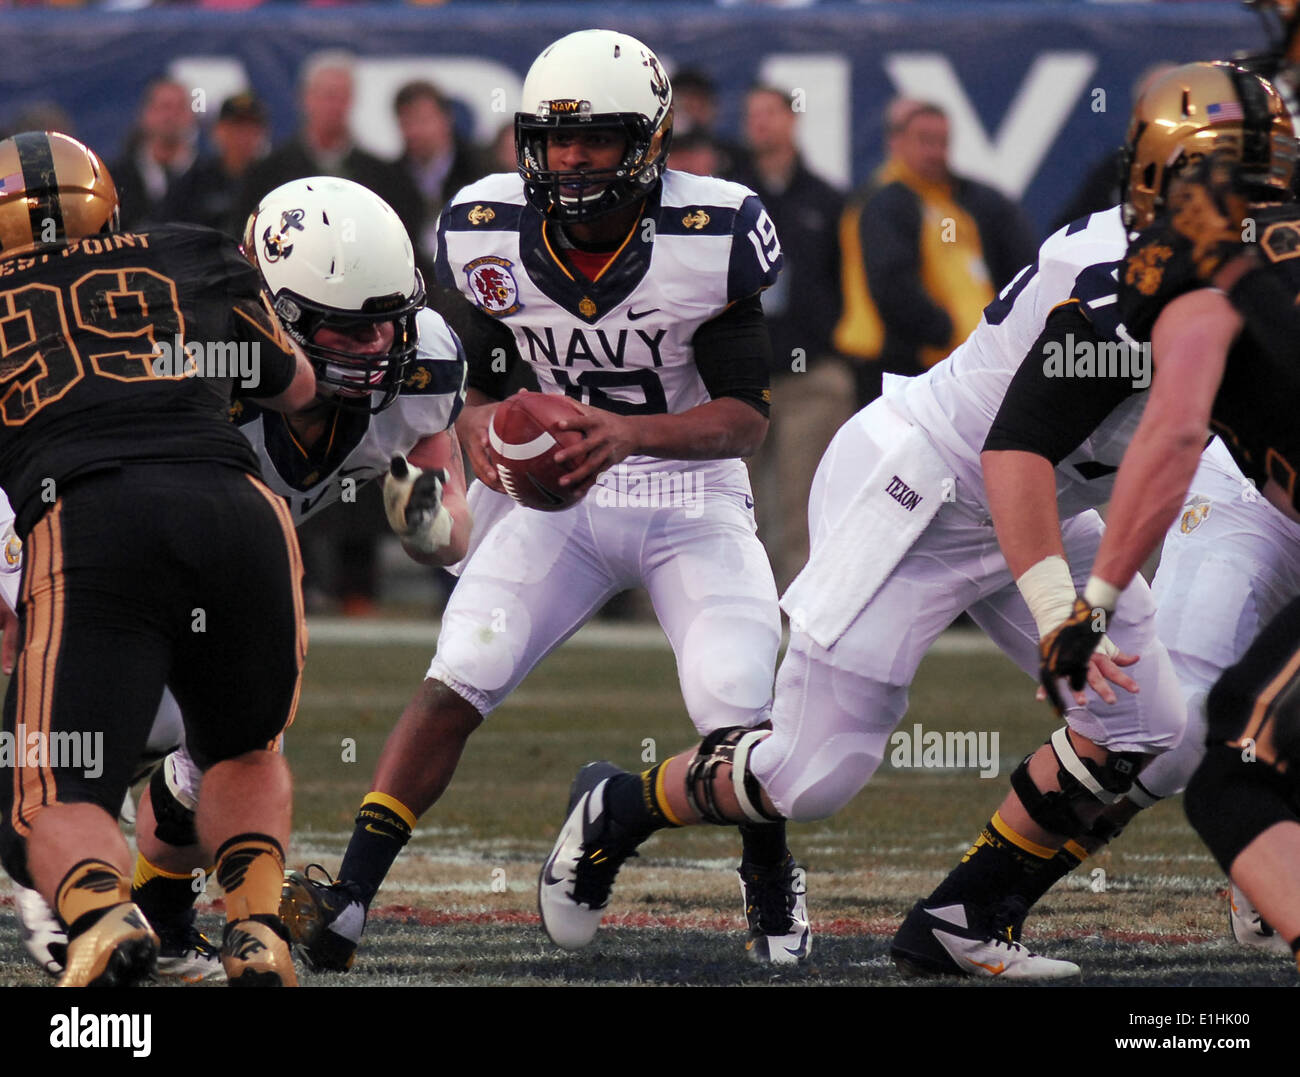 U.S. Naval Academy quarterback Keenan Reynolds dodges U.S. Military Academy defenders during the 113th Army vs. Navy Football g Stock Photo